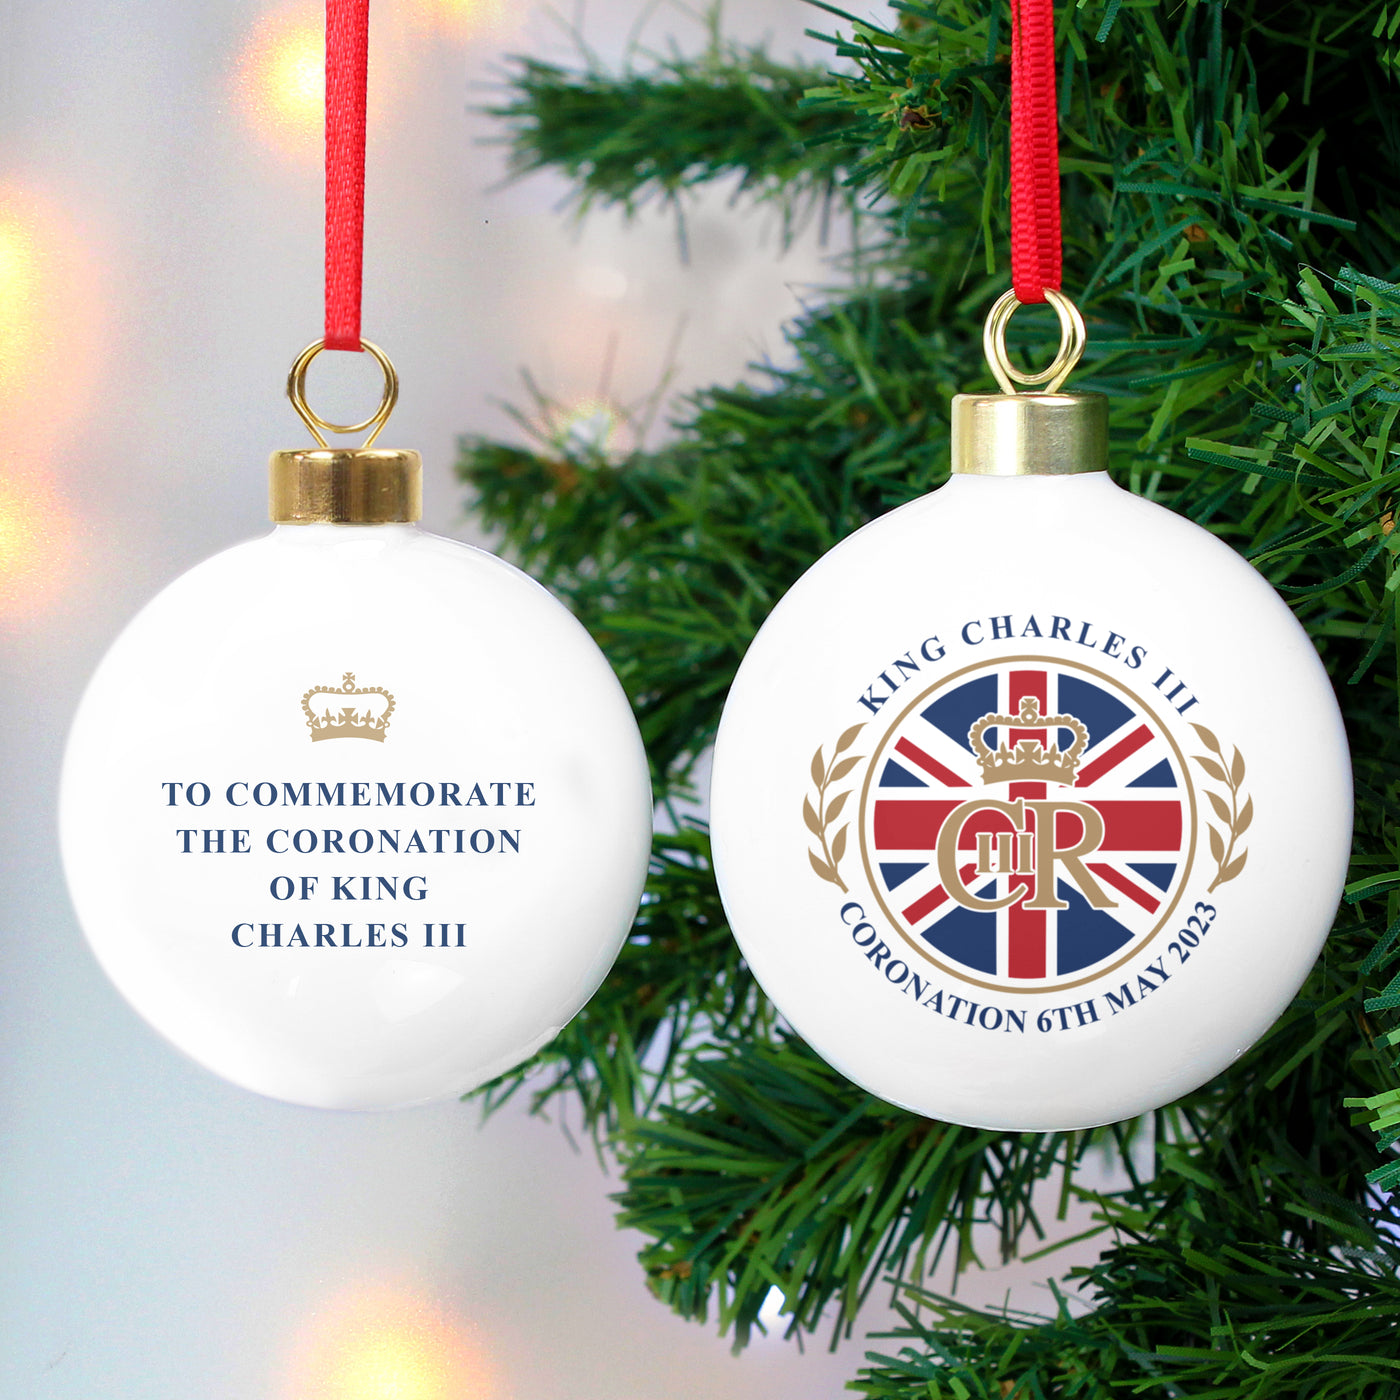 His Majesty King Charles III Union Jack Coronation Commemorative Bauble